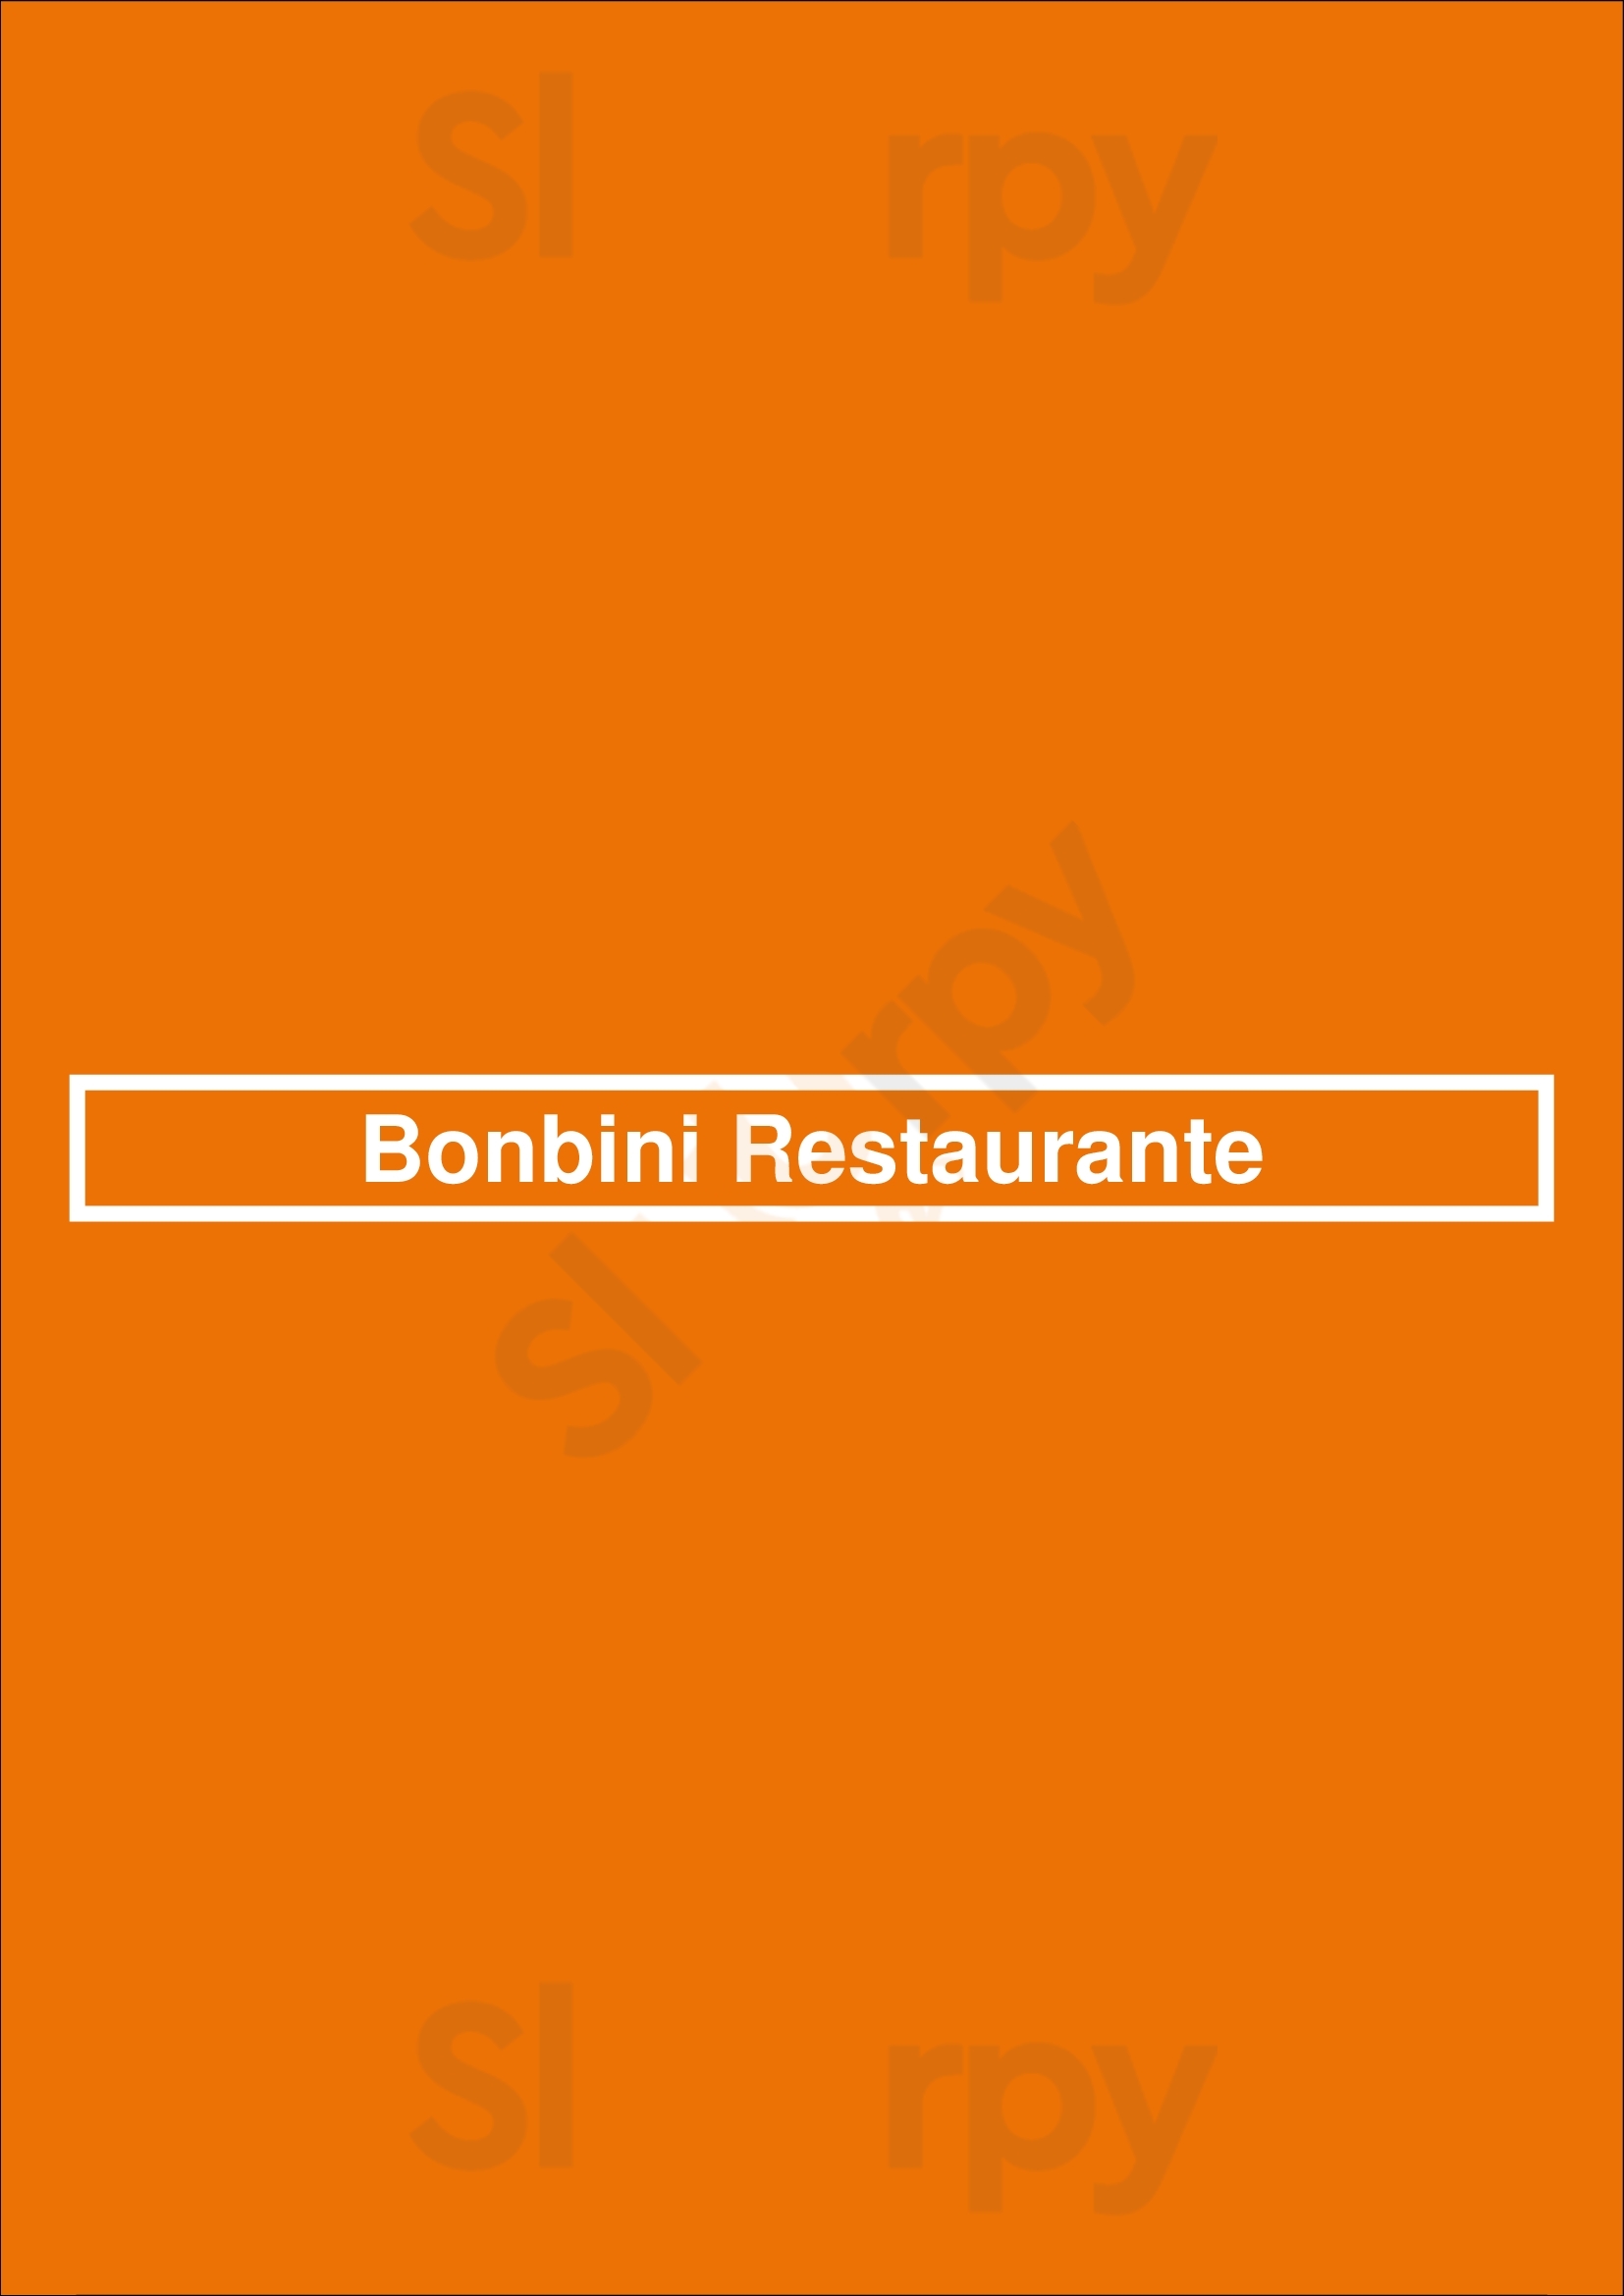 Bonbini Restaurante Madrid Menu - 1